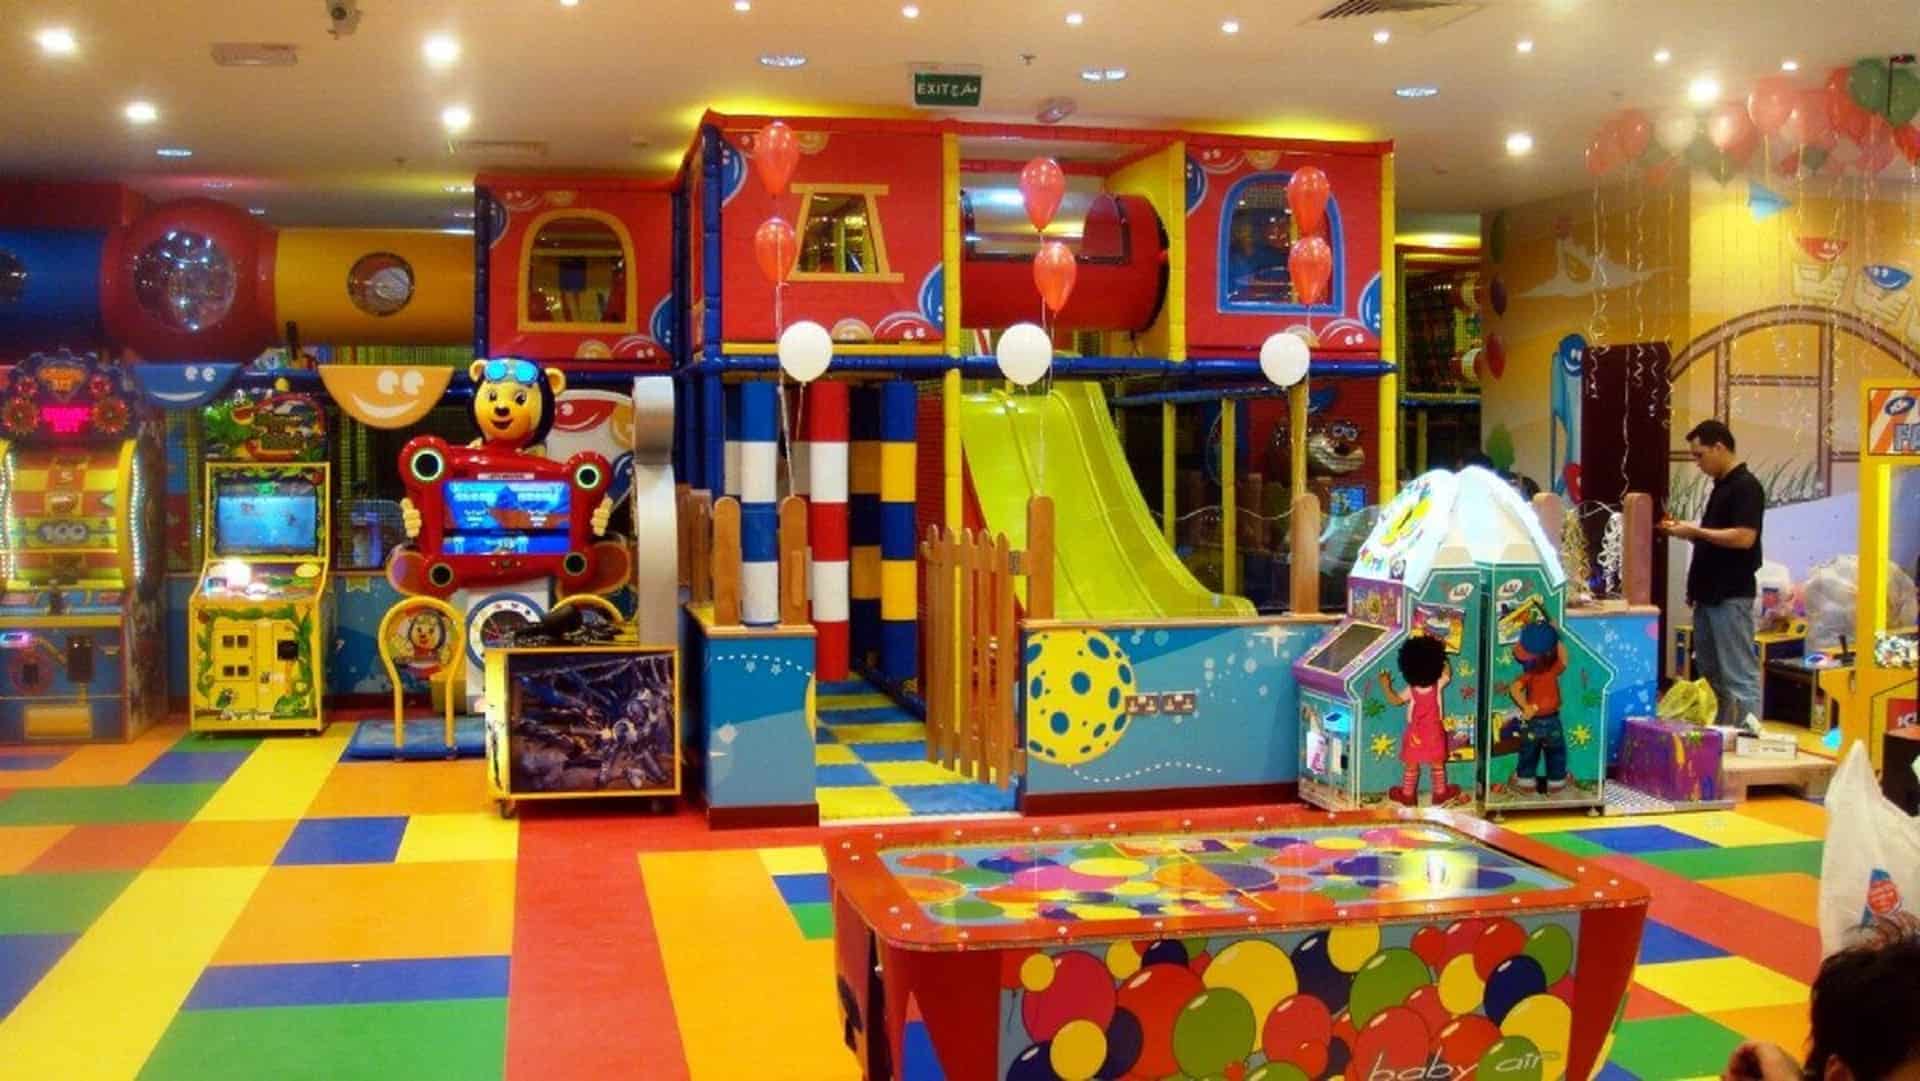 Y Den - Indoor Soft Play Area in UK